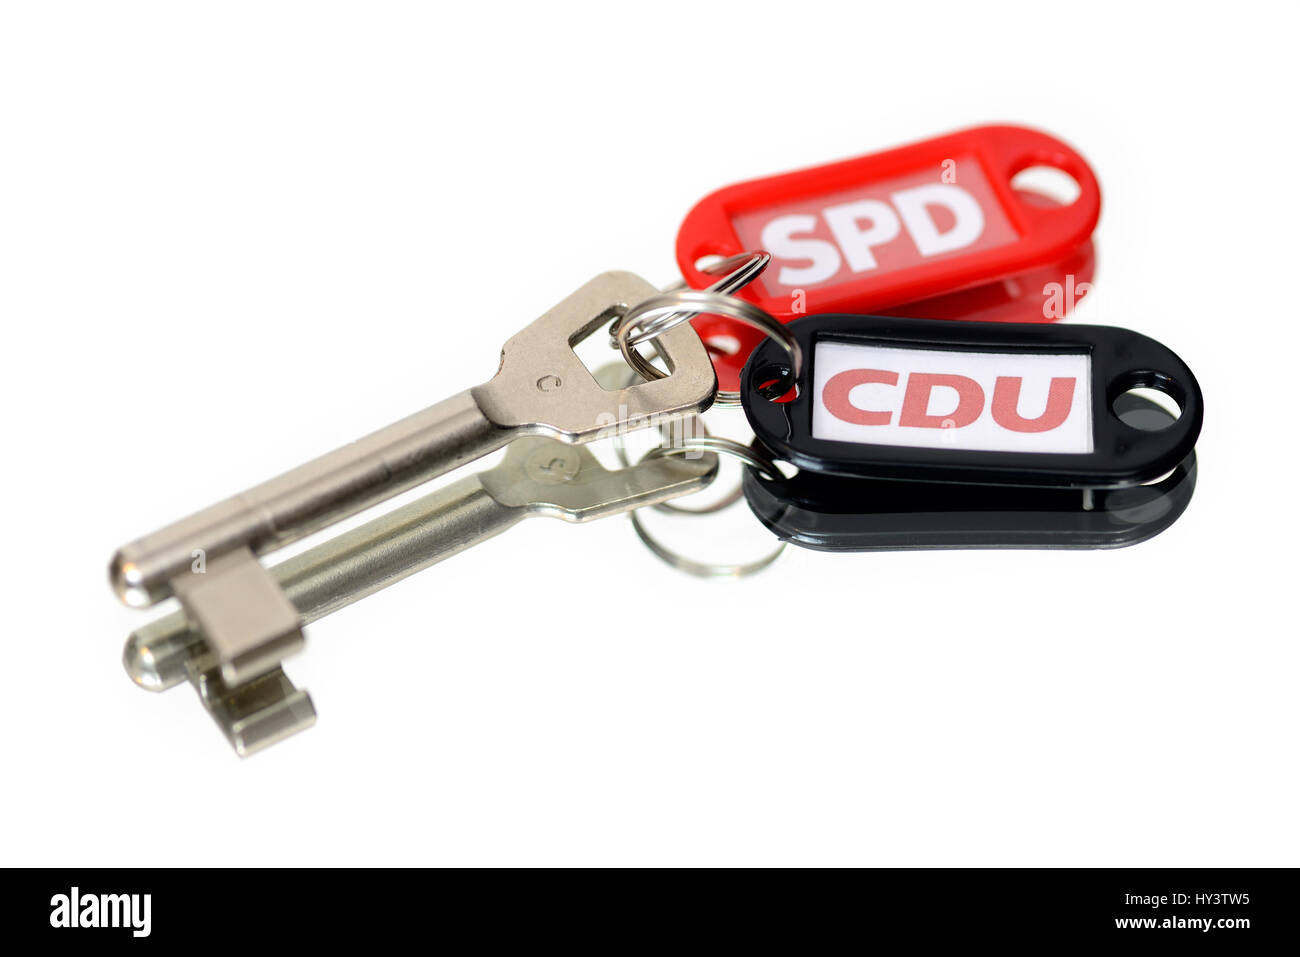 Tasto con la catena della CDU e SPD, foto simbolico di grande coalizione, Schlüssel mit Schlüsselanhänger von CDU und SPD, Symbolfoto Große Koalition Foto Stock